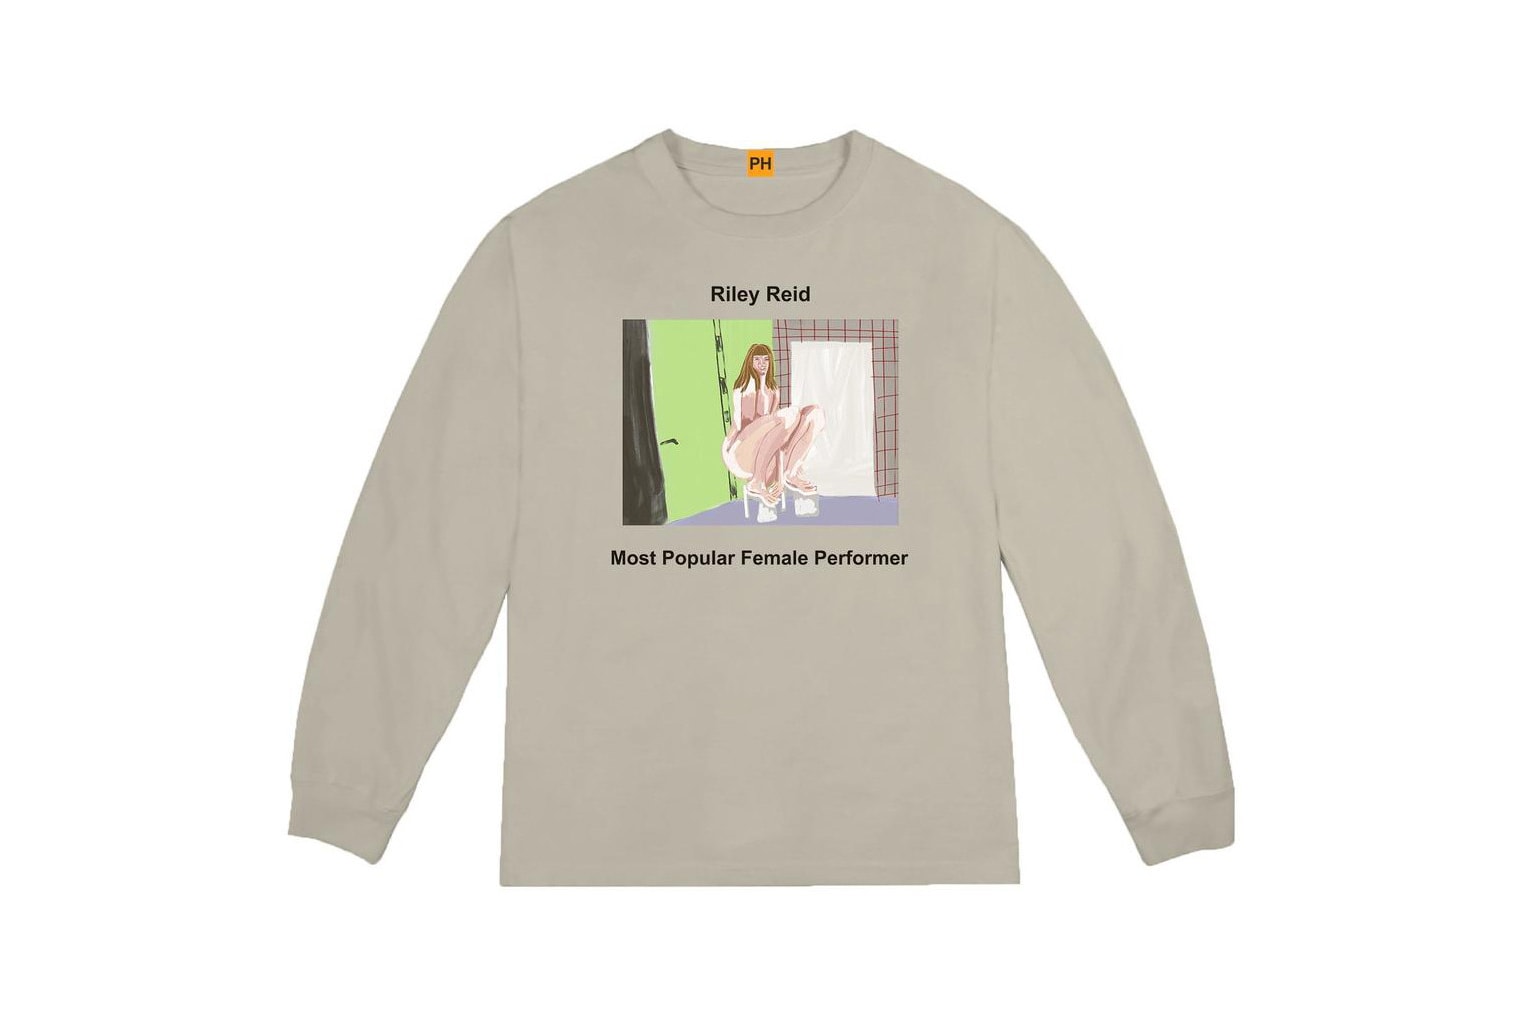 Pornhub YEEZY Kanye West Long Sleeve Shirt Riley Reid Collaboration Capsule Collection